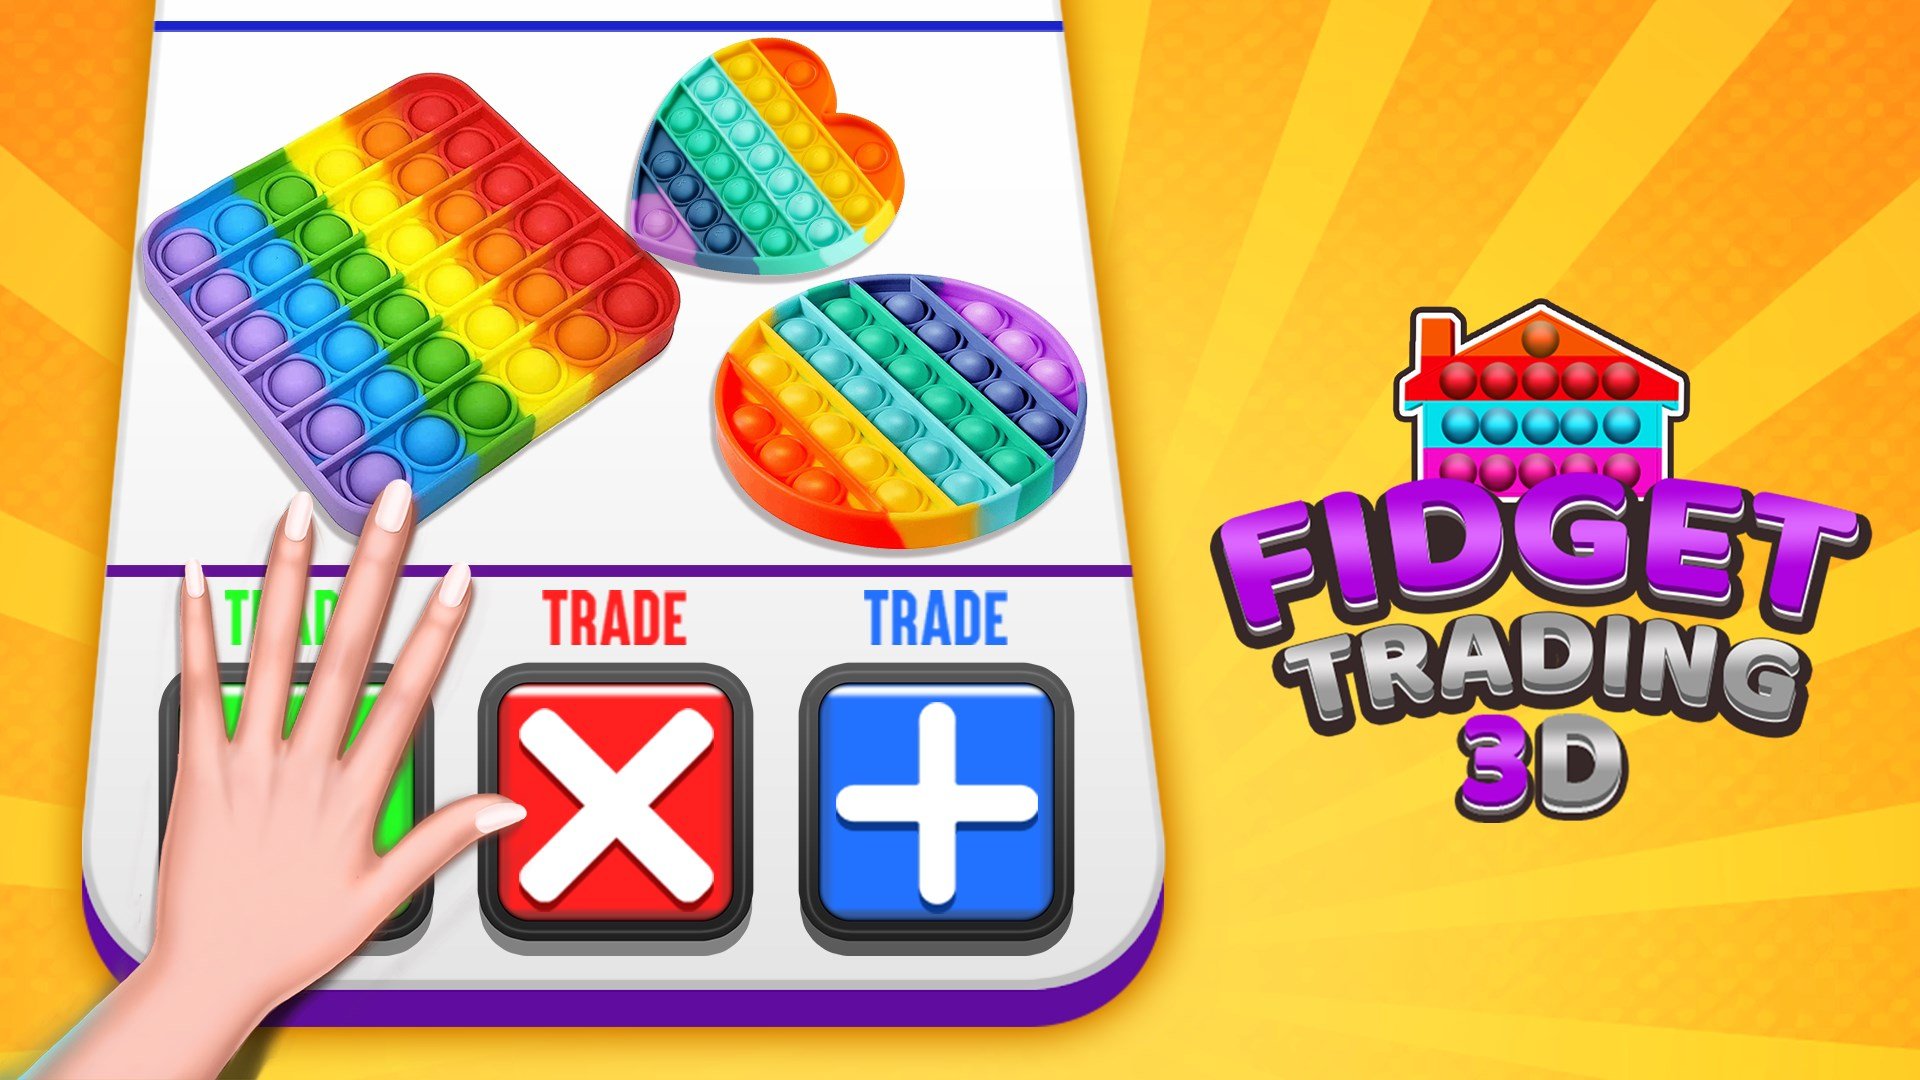 Fidget Trading 3D - Fidget Toys